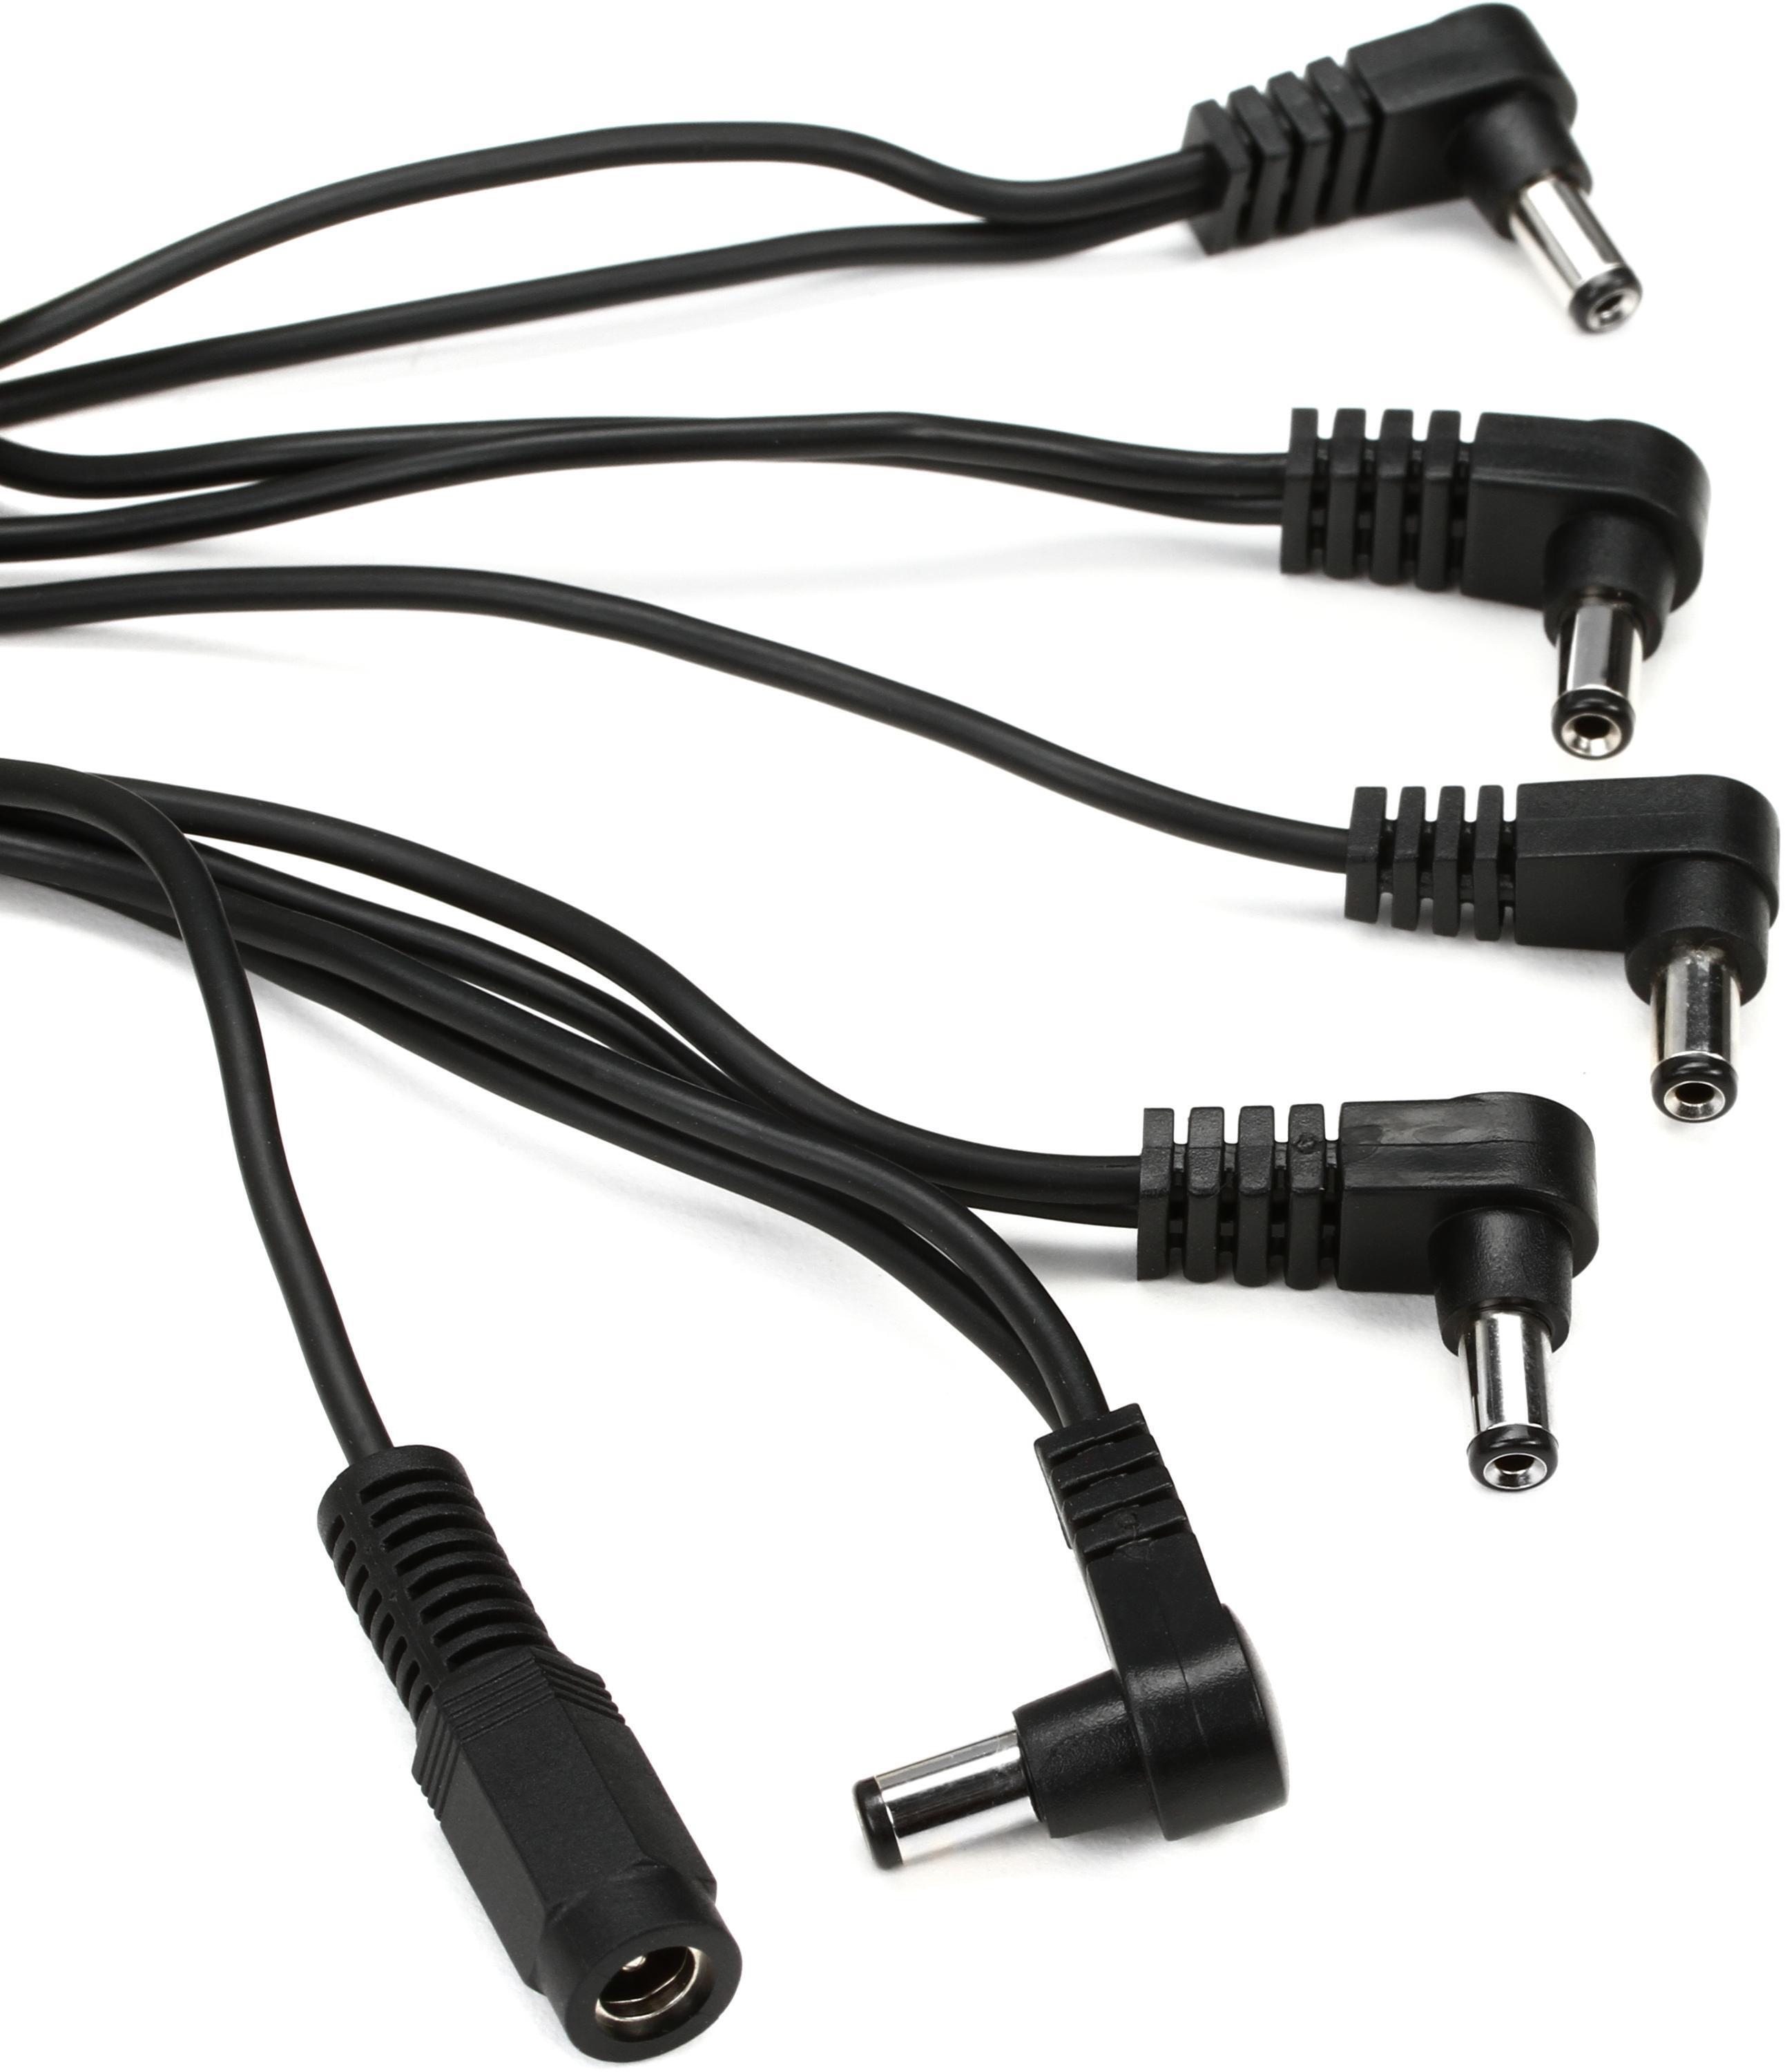 Bundled Item: Truetone MC5 1 SPOT Multi-Plug 5 Cable